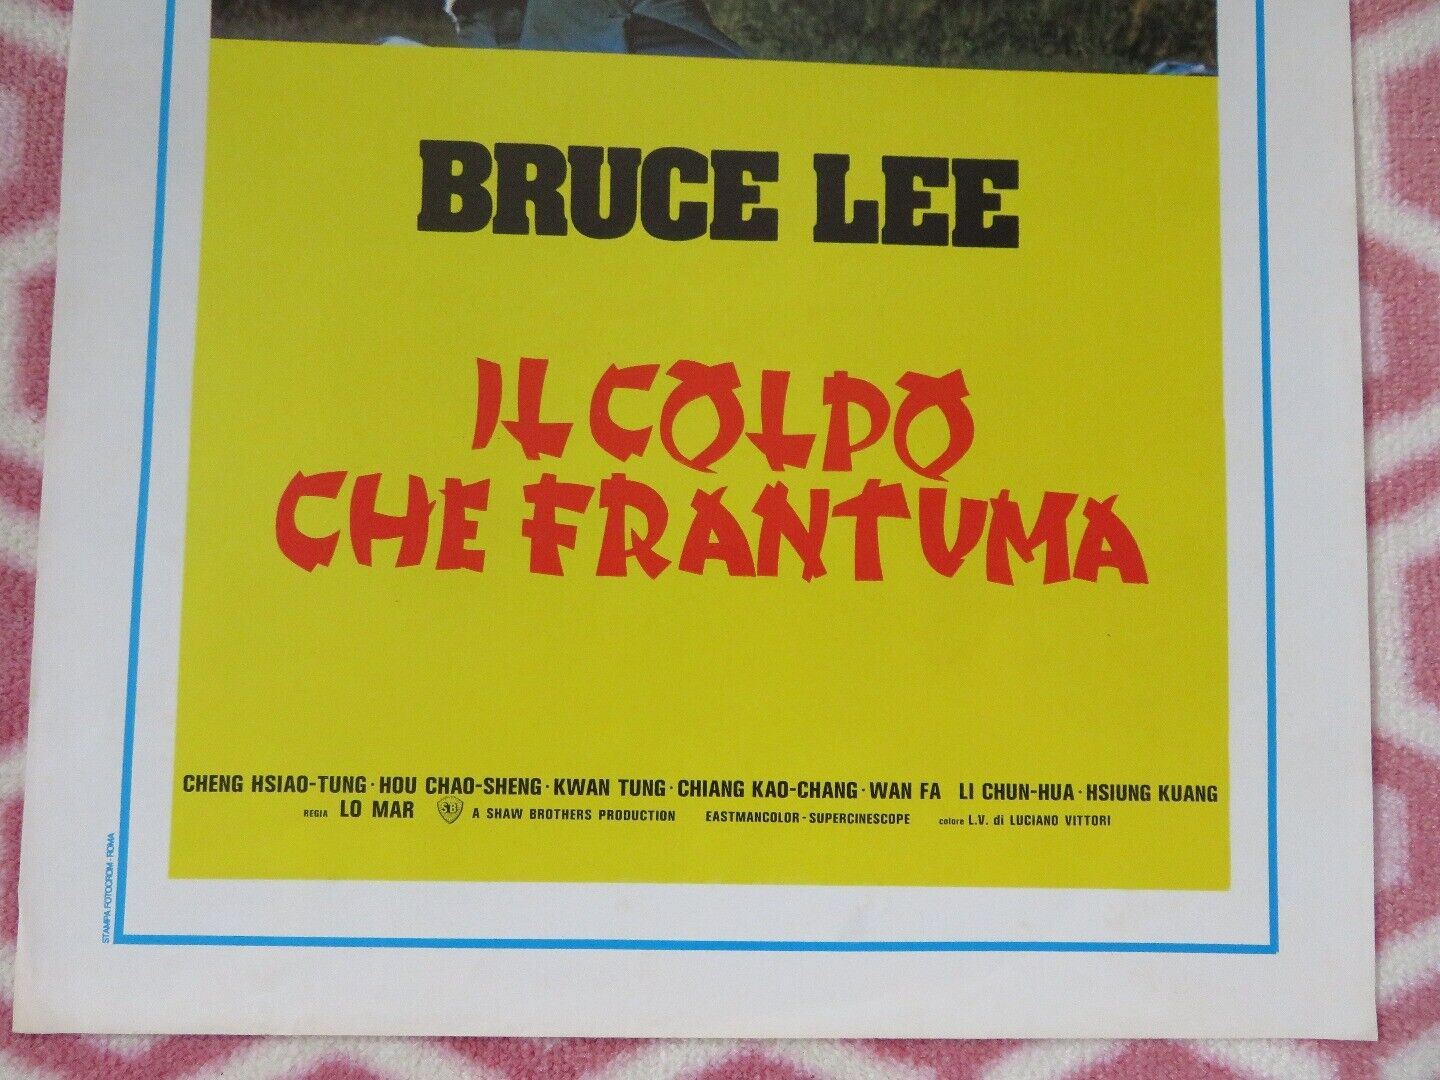 FIST OF FURY ITALIAN LOCANDINA (27.5"x 13") POSTER BRUCE LEE 1972